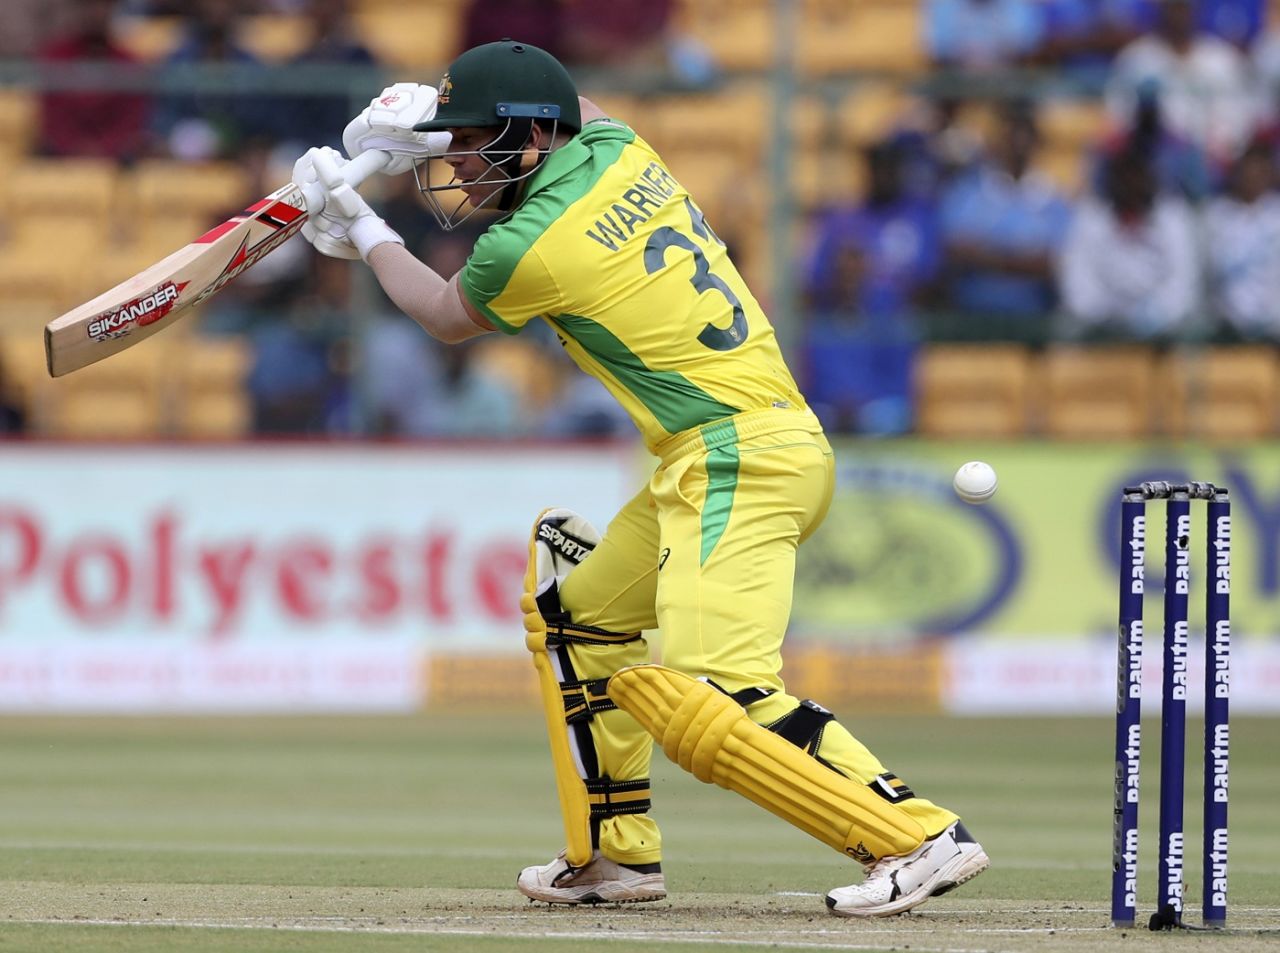 David Warner nibbles at one outside off, India v Australia, 3rd ODI, Bengaluru, January 19, 2020